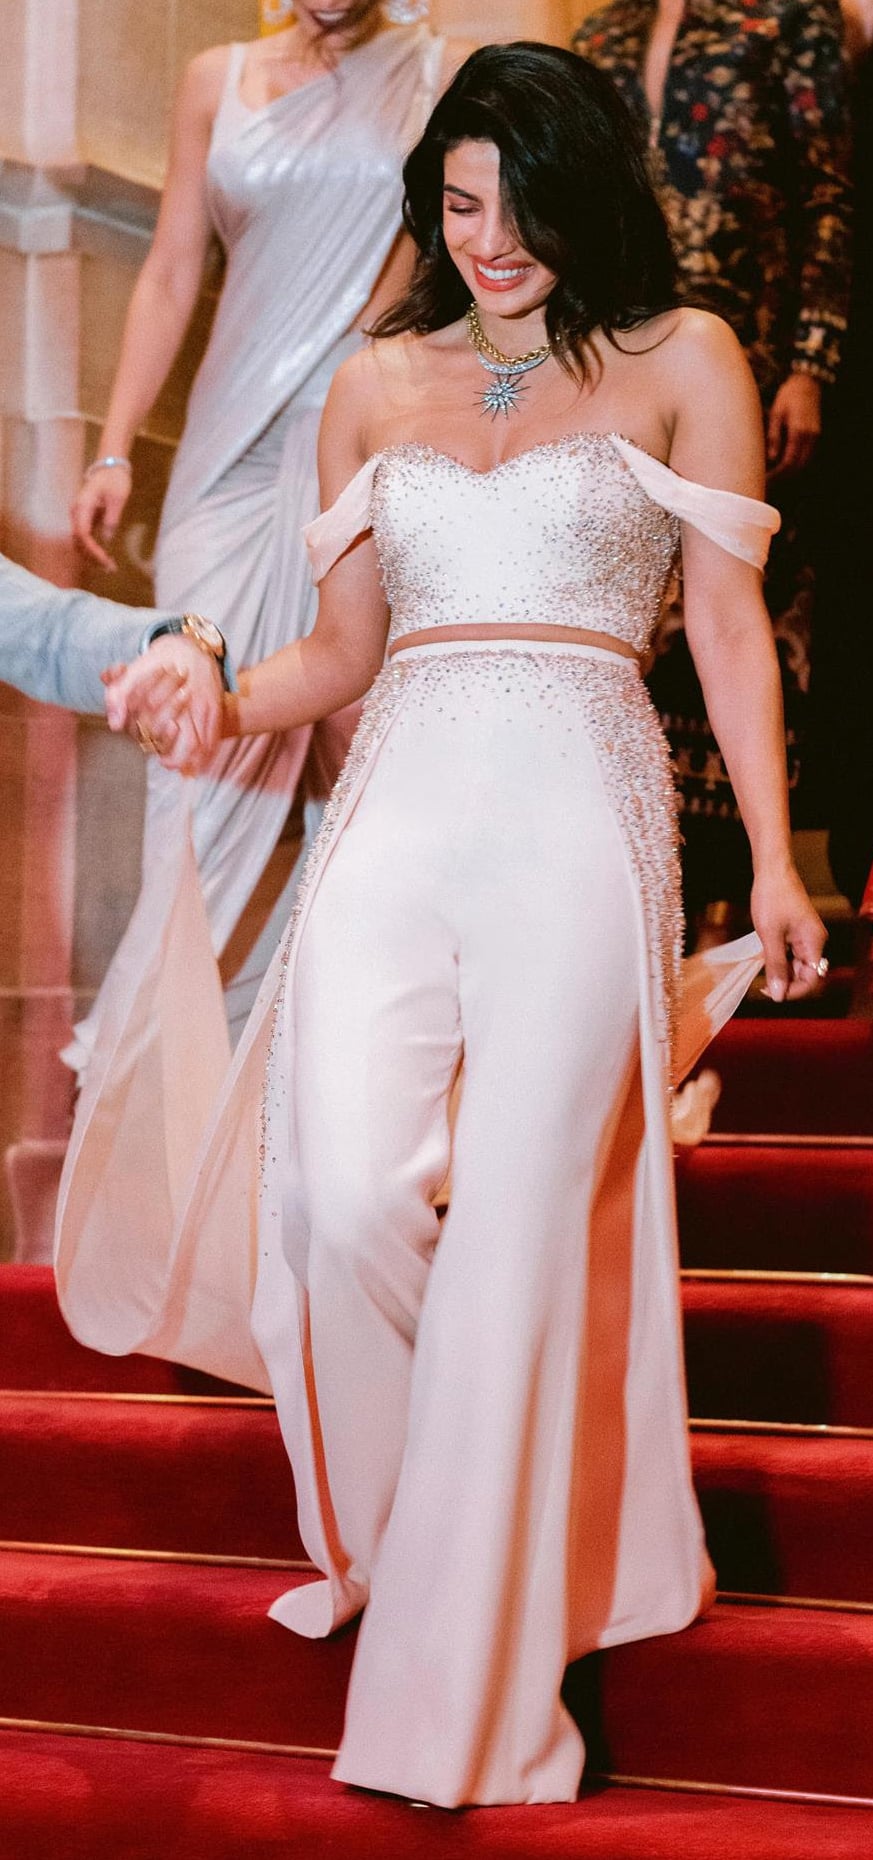 10 sheer celebrity wedding dresses, from Priyanka Chopra's